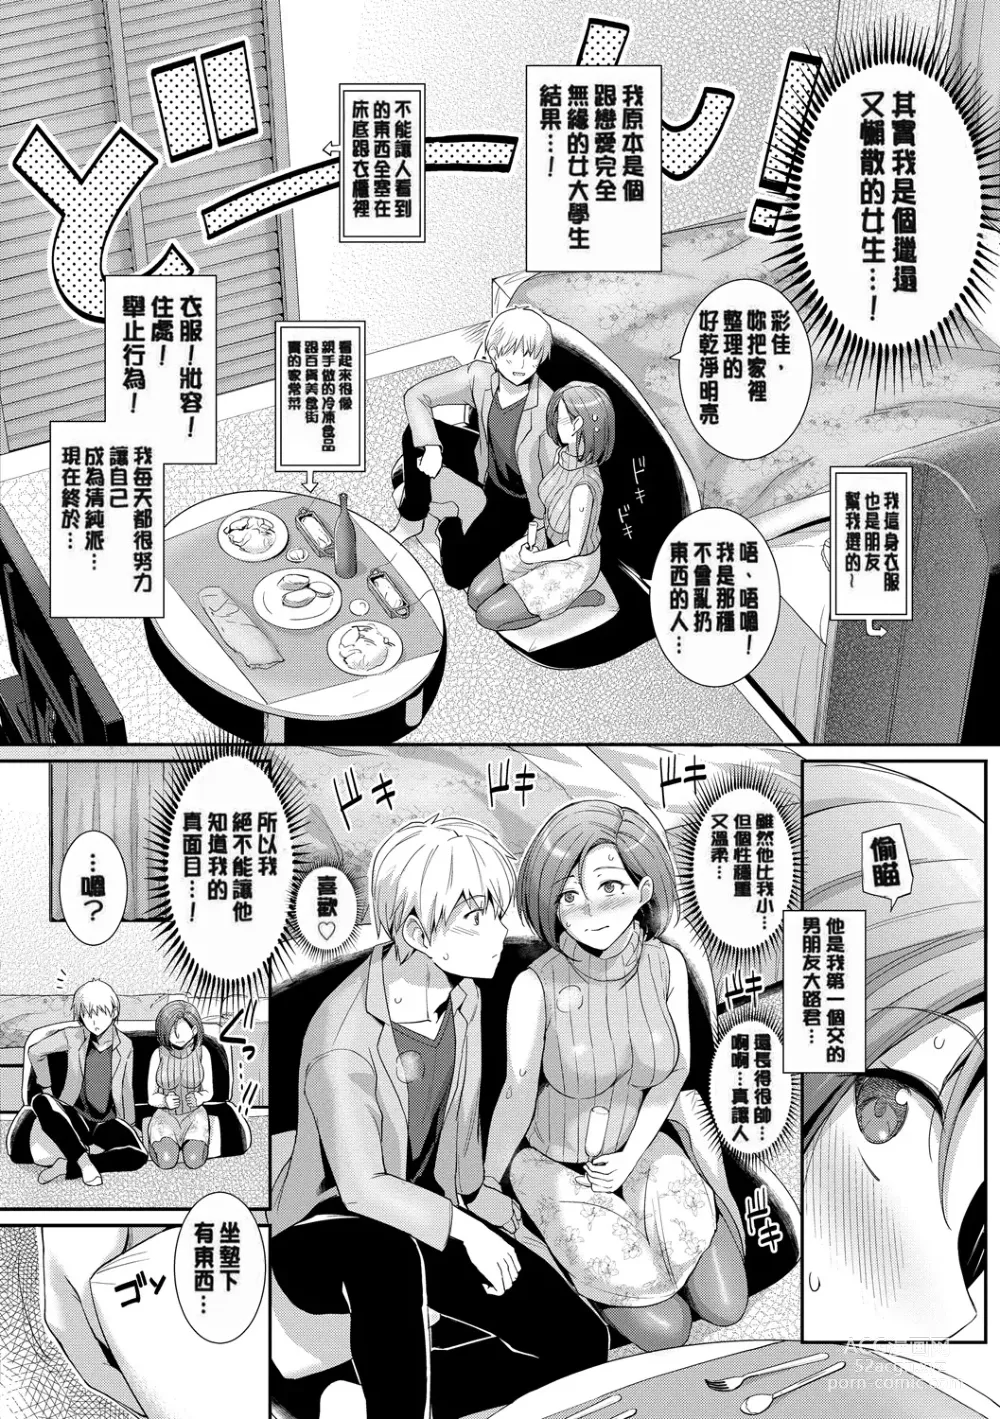 Page 178 of manga 甘色バニラ (uncensored)